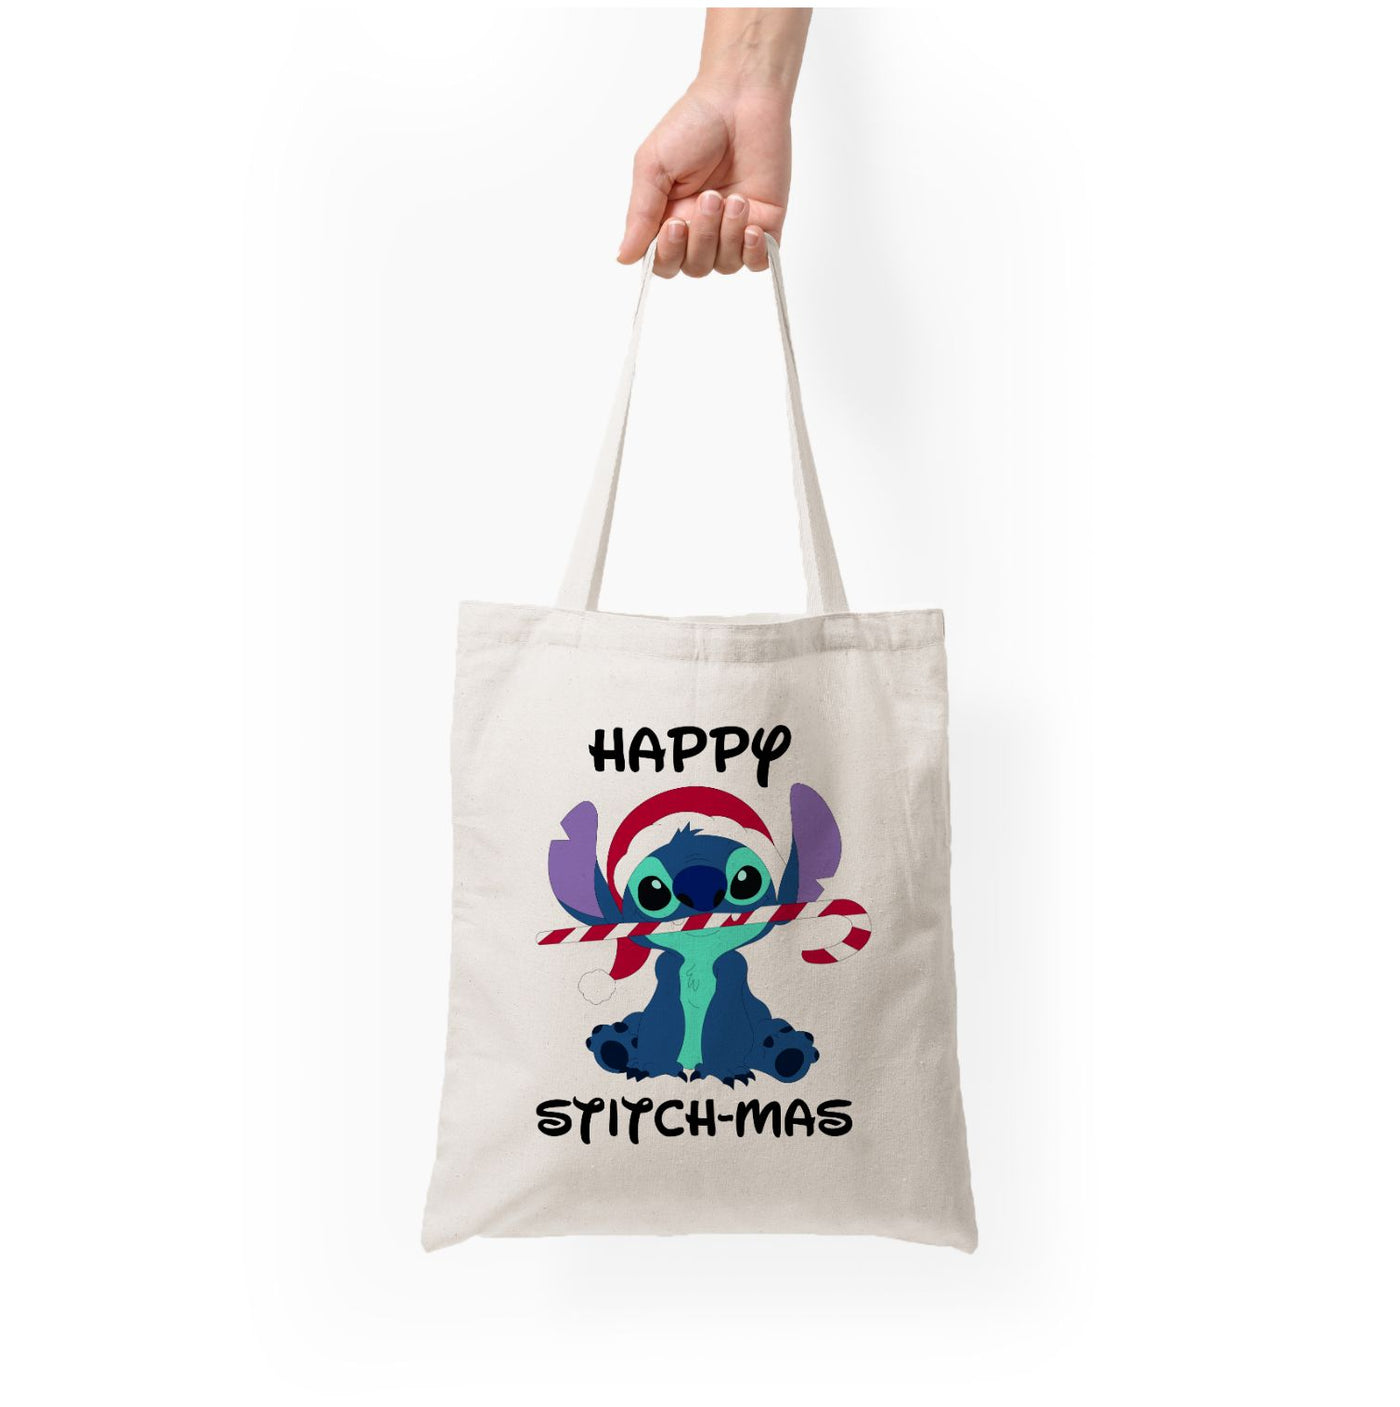 Happy Stitchmas - Christmas Tote Bag